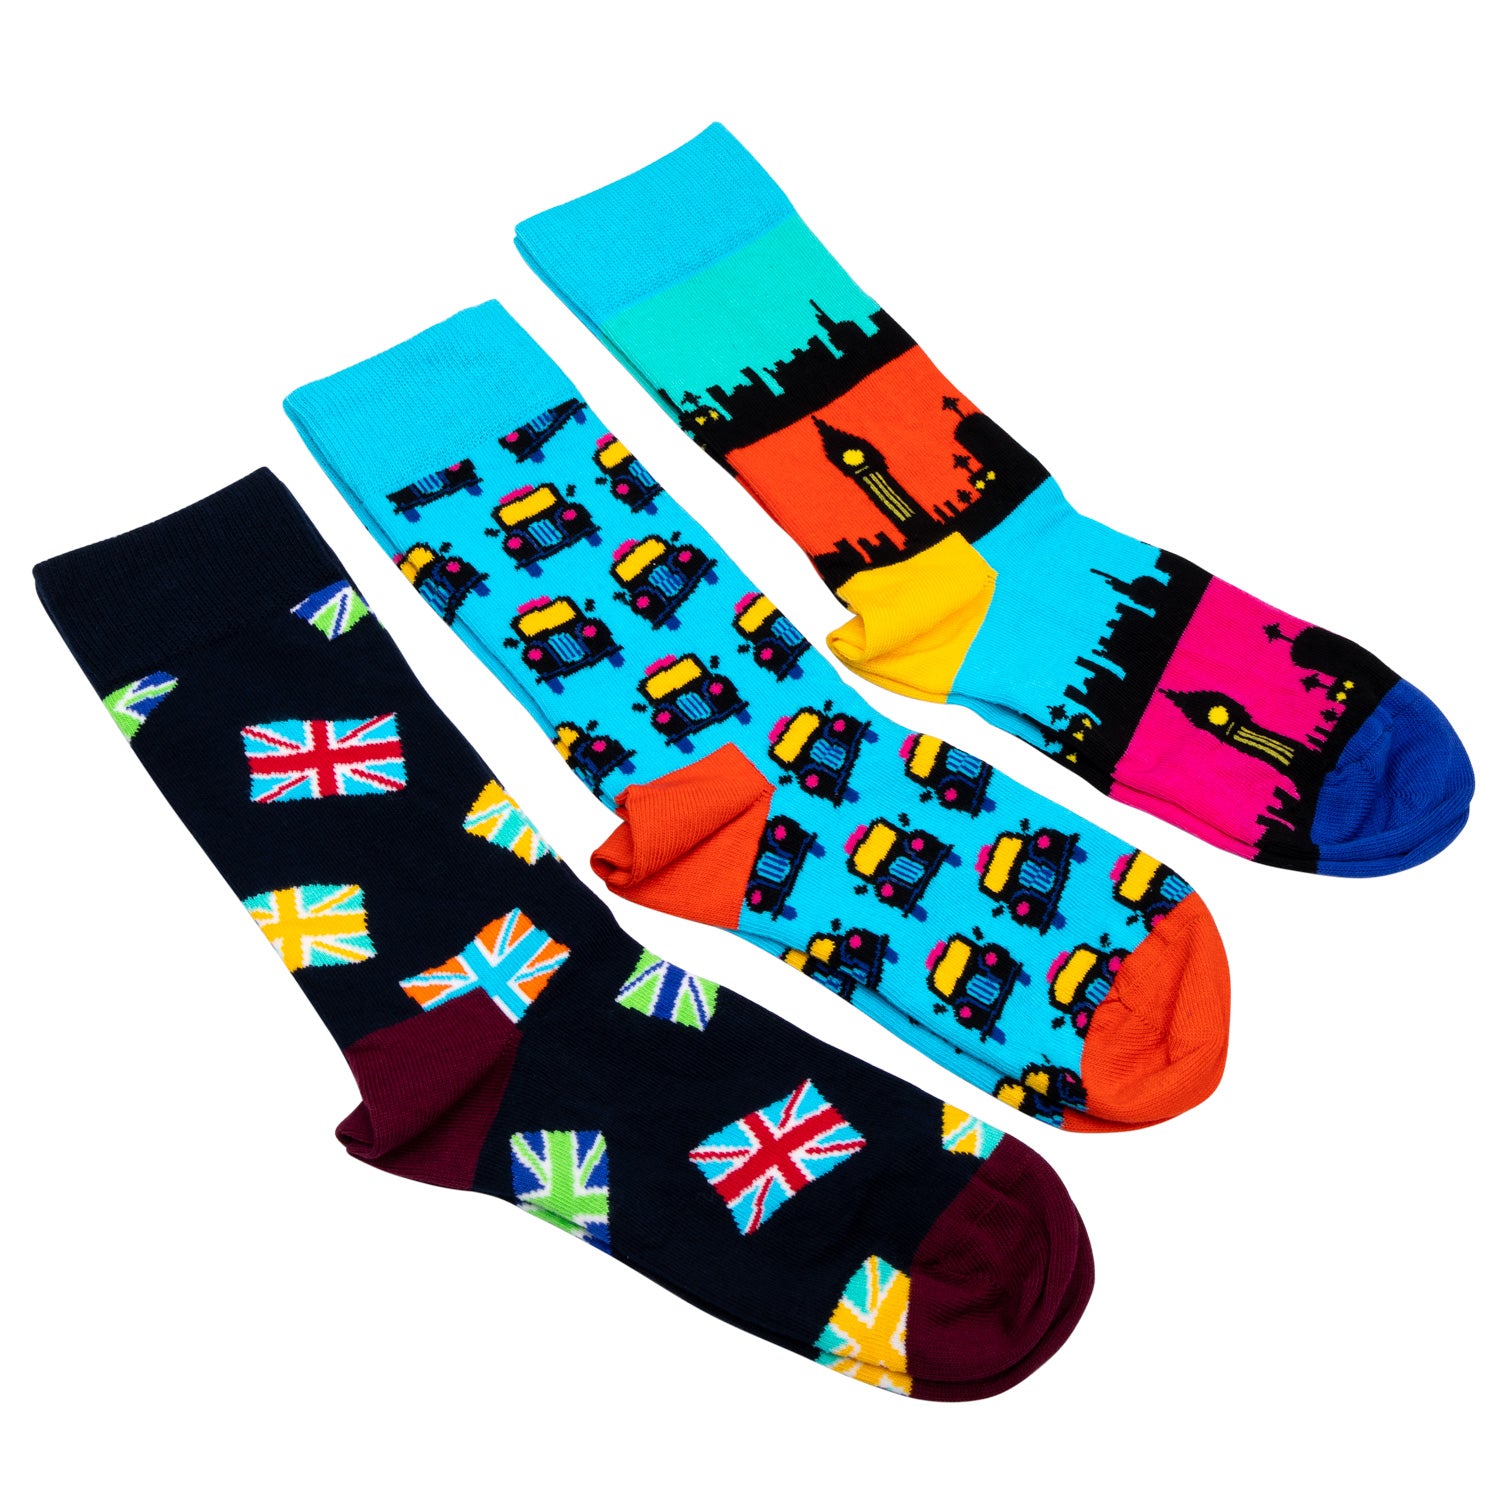 Happy Socks London Taxi Gift Box - NEW 2